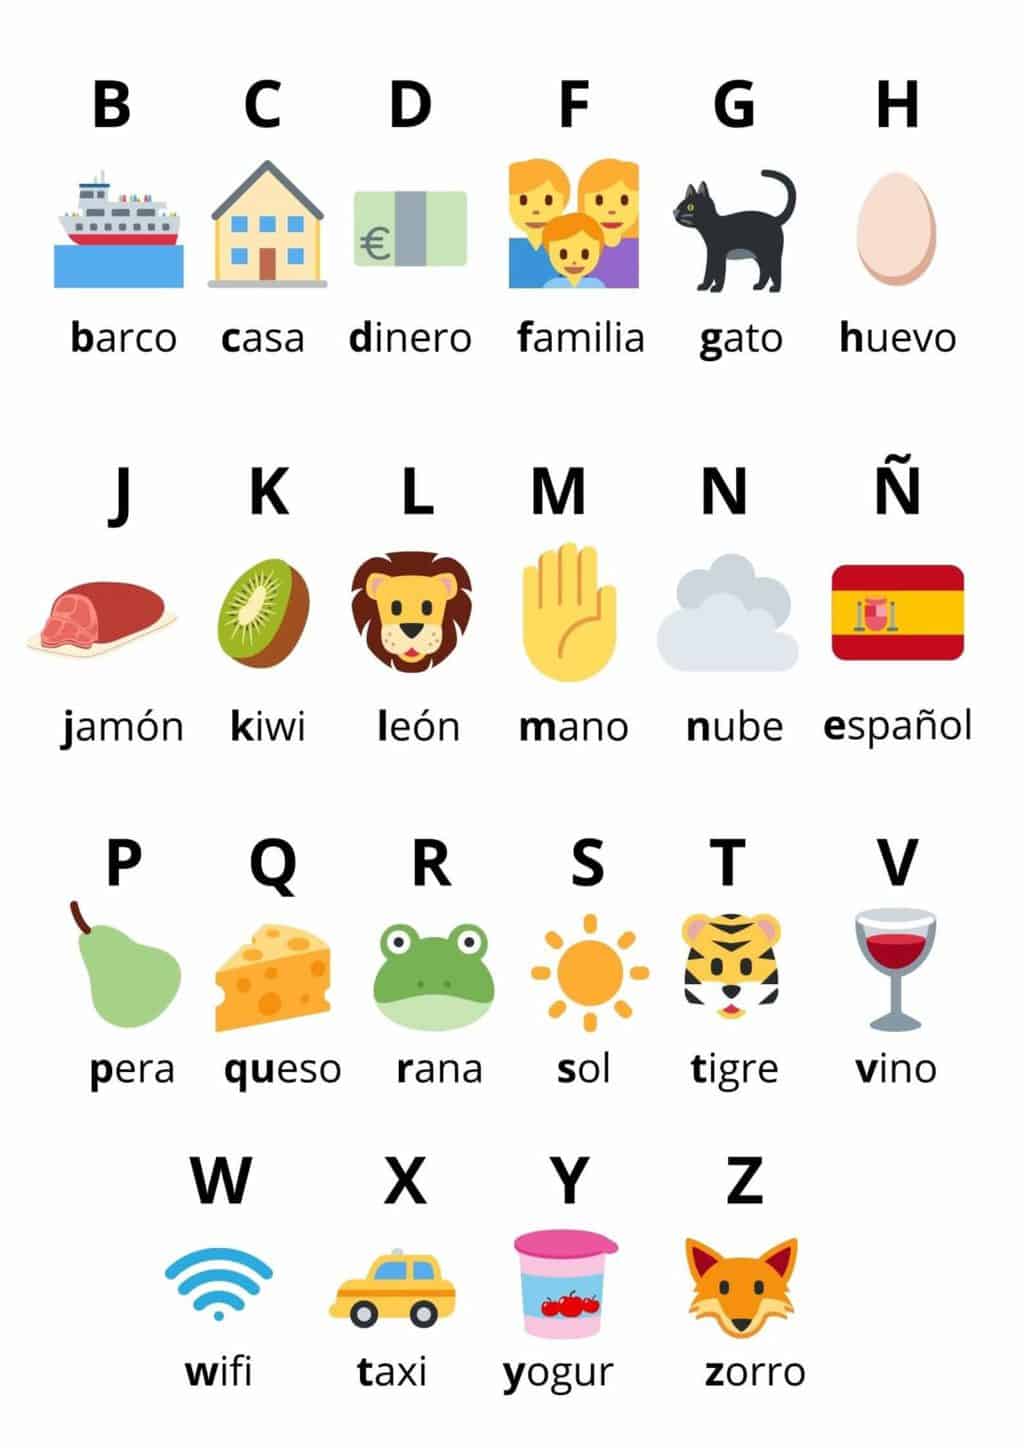 Alphabet Spanish Words That Start With W